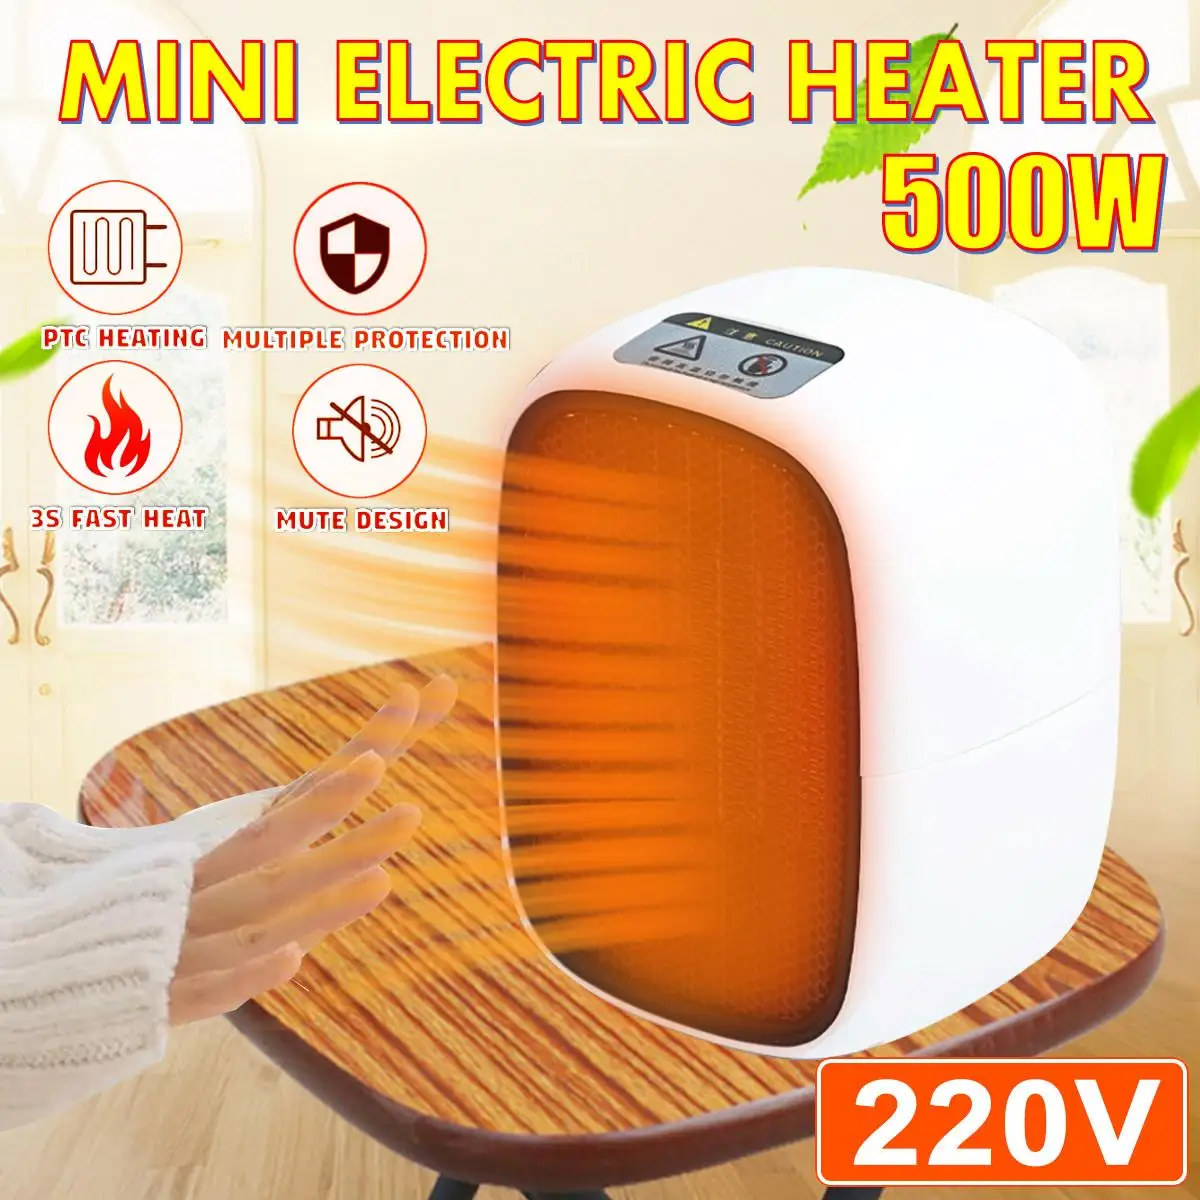 

Portable Electric Heaters Fan countertop Mini home room handy Fast Power saving Warmer foot wamer PTC Ceramic Heating 220V 500W